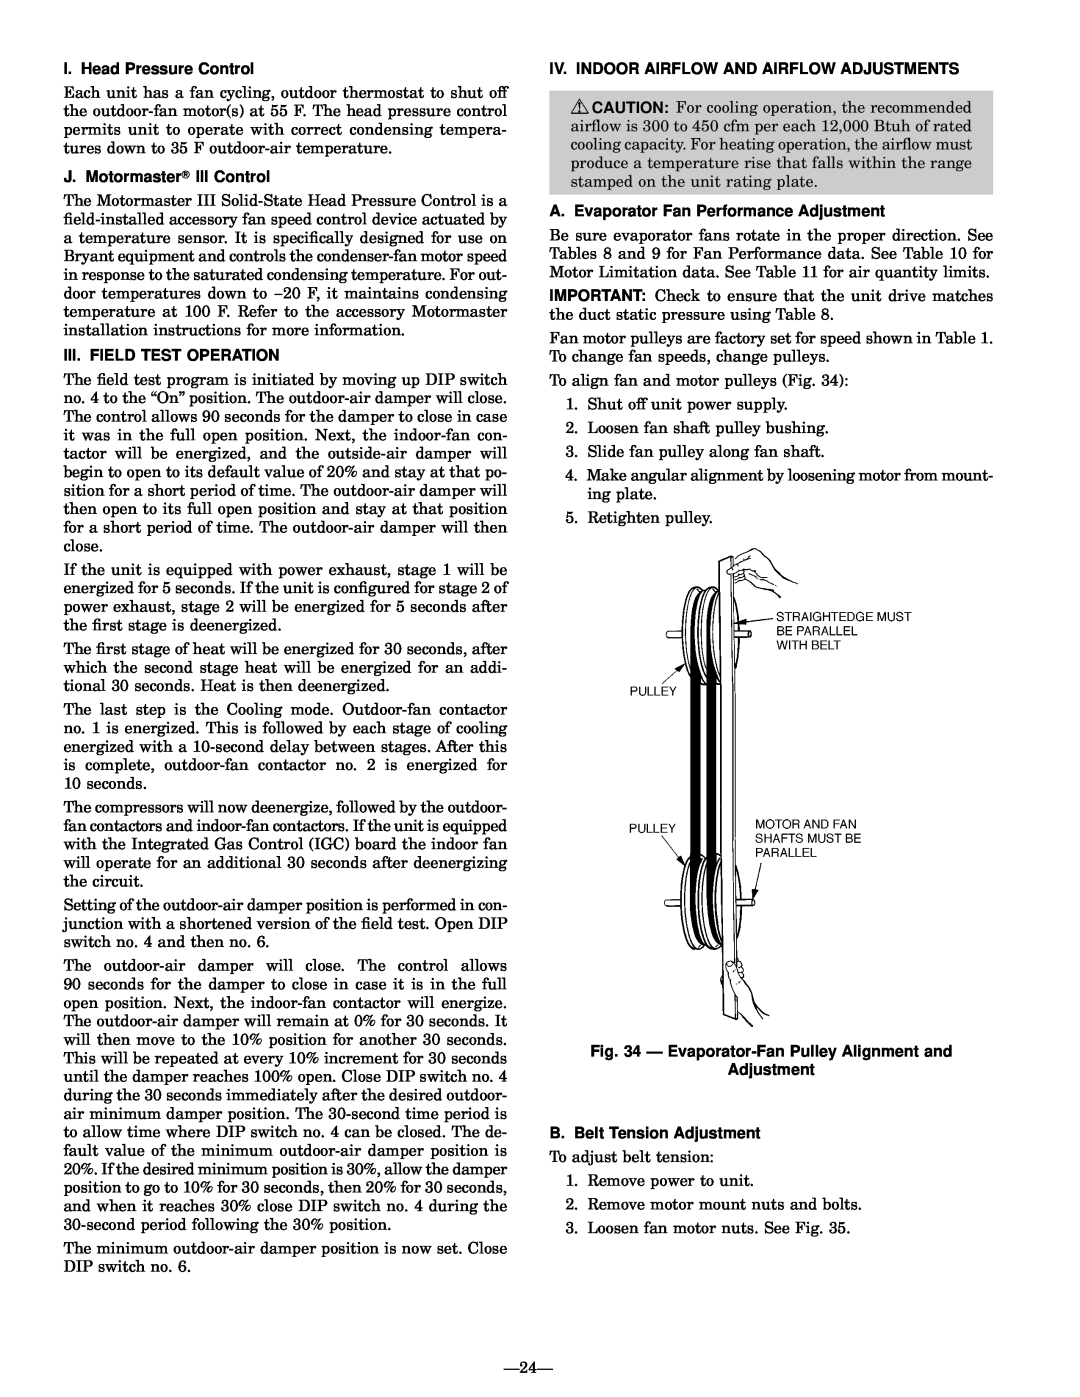 Bryant 580G manual I. Head Pressure Control, J. Motormaster III Control, Iii. Field Test Operation 